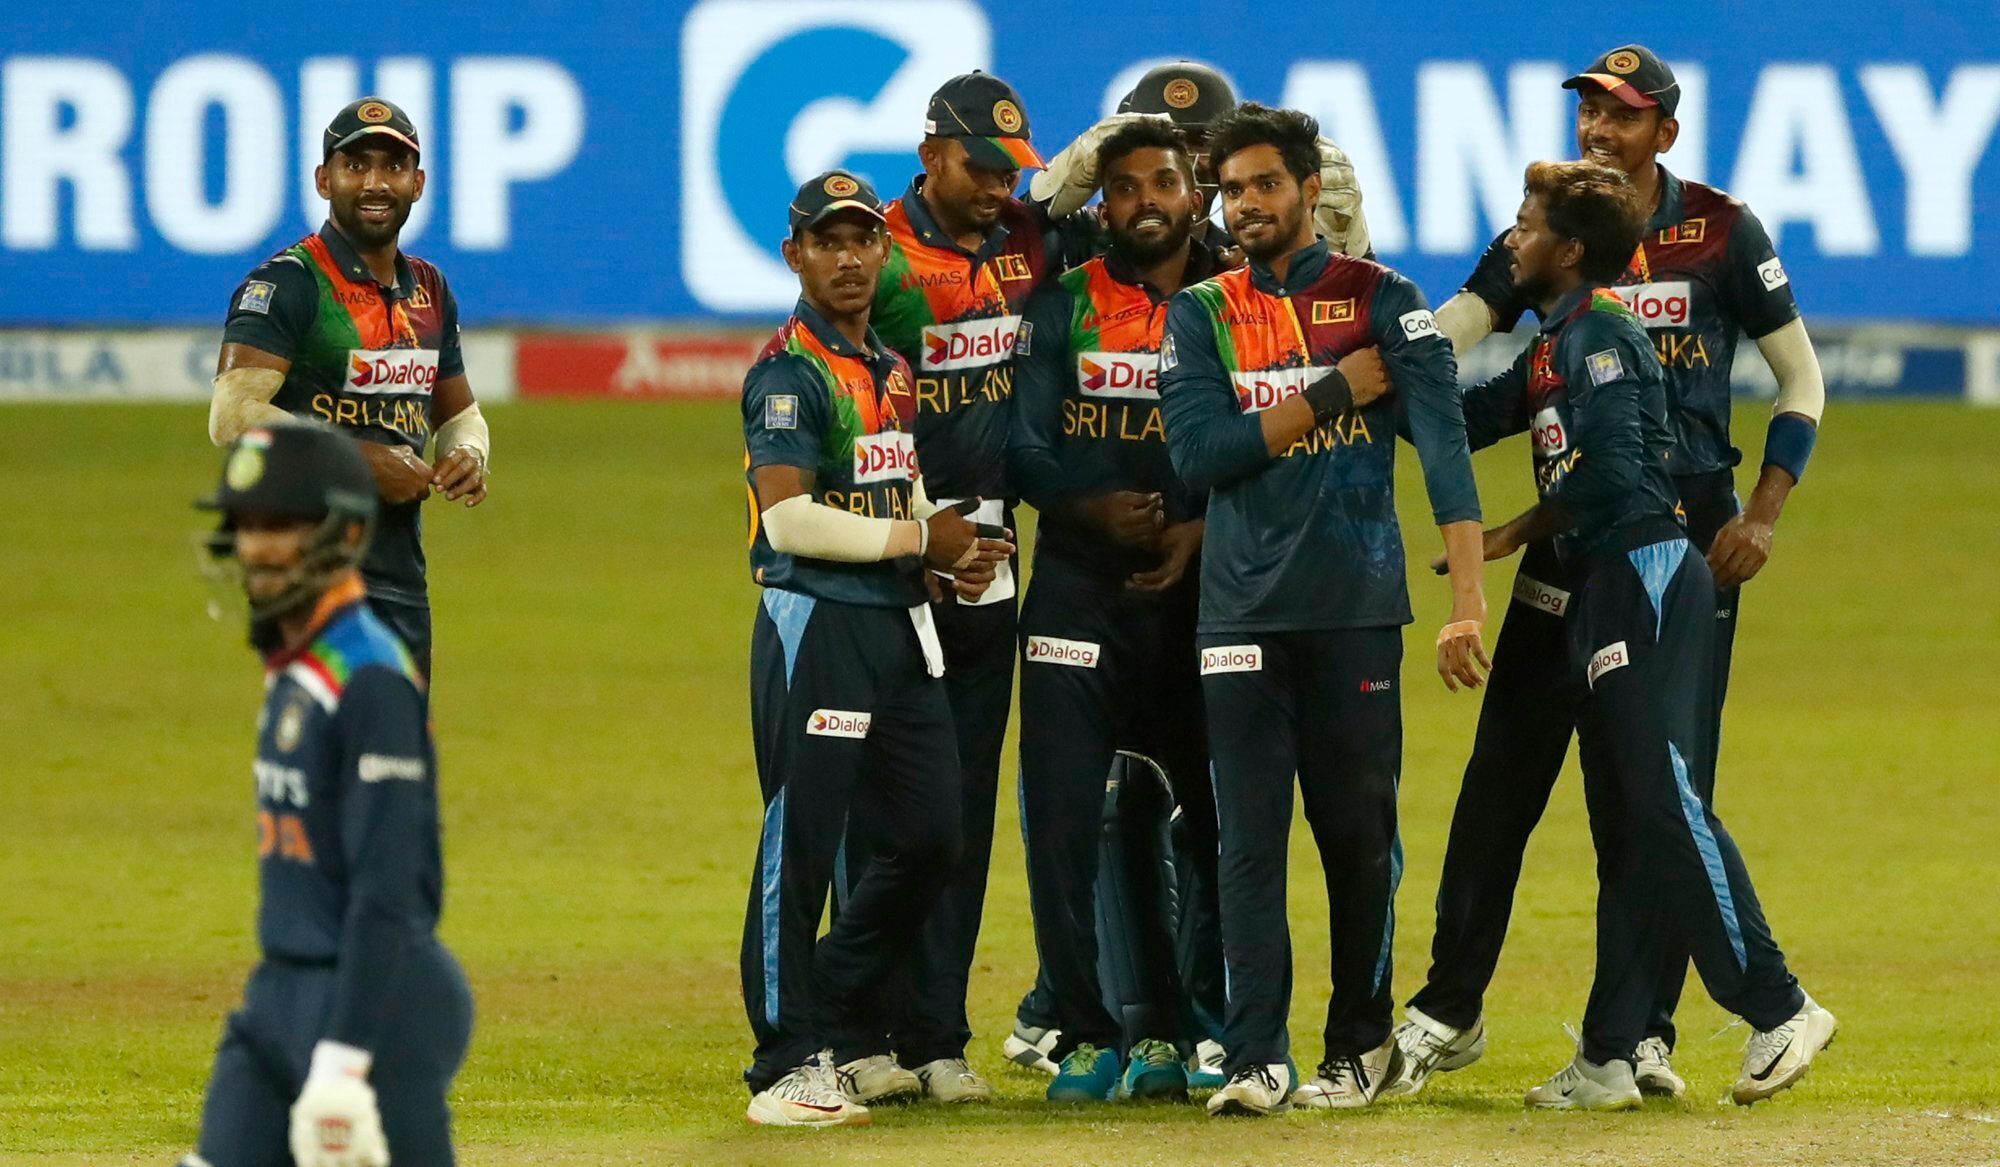 India vs Sri Lanka 3rd T20 Highlights: Sri Lanka beat India by 7 wickets to clinch  series 2-1